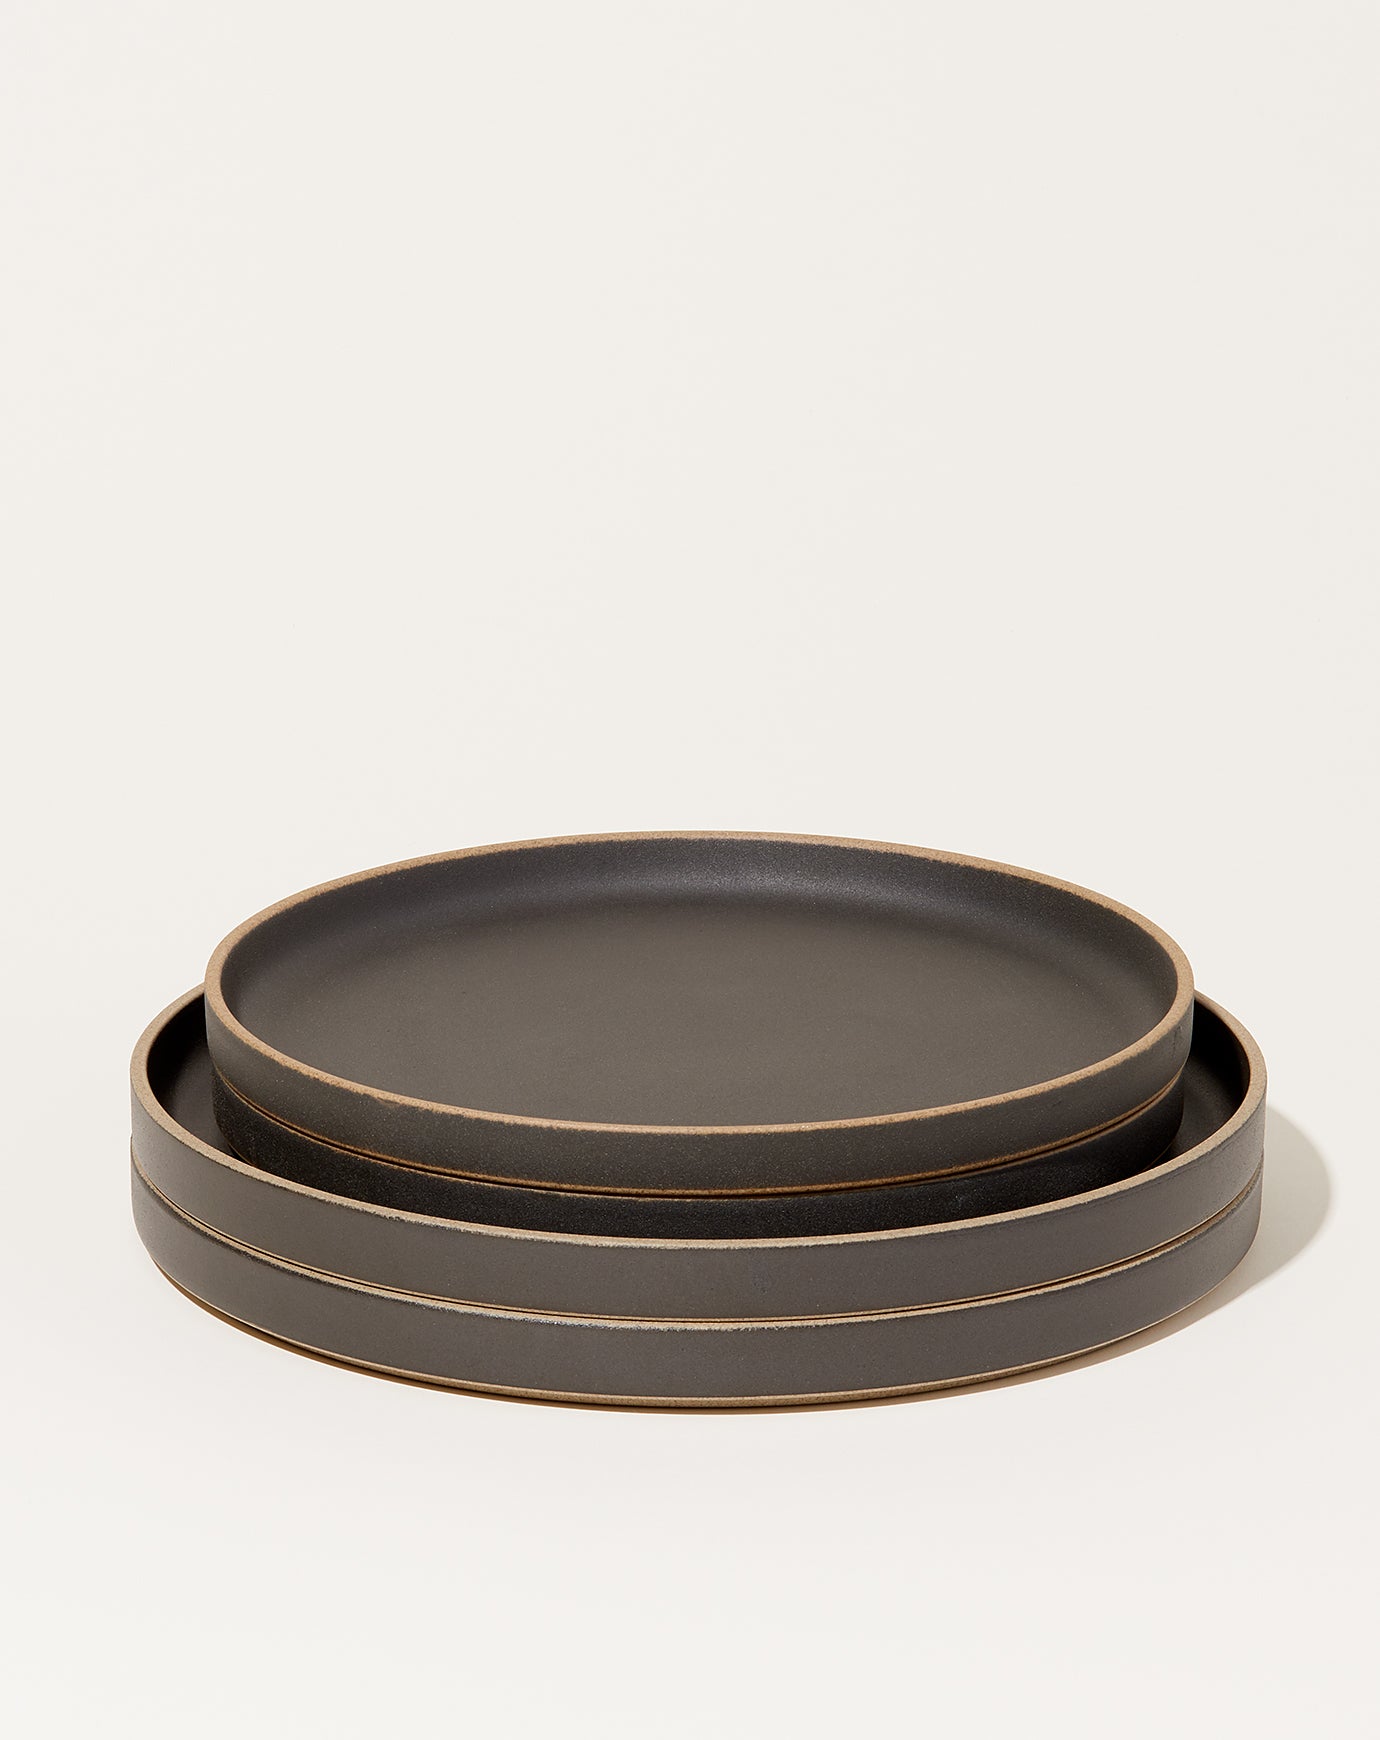 Hasami Porcelain 10" Plate in Black